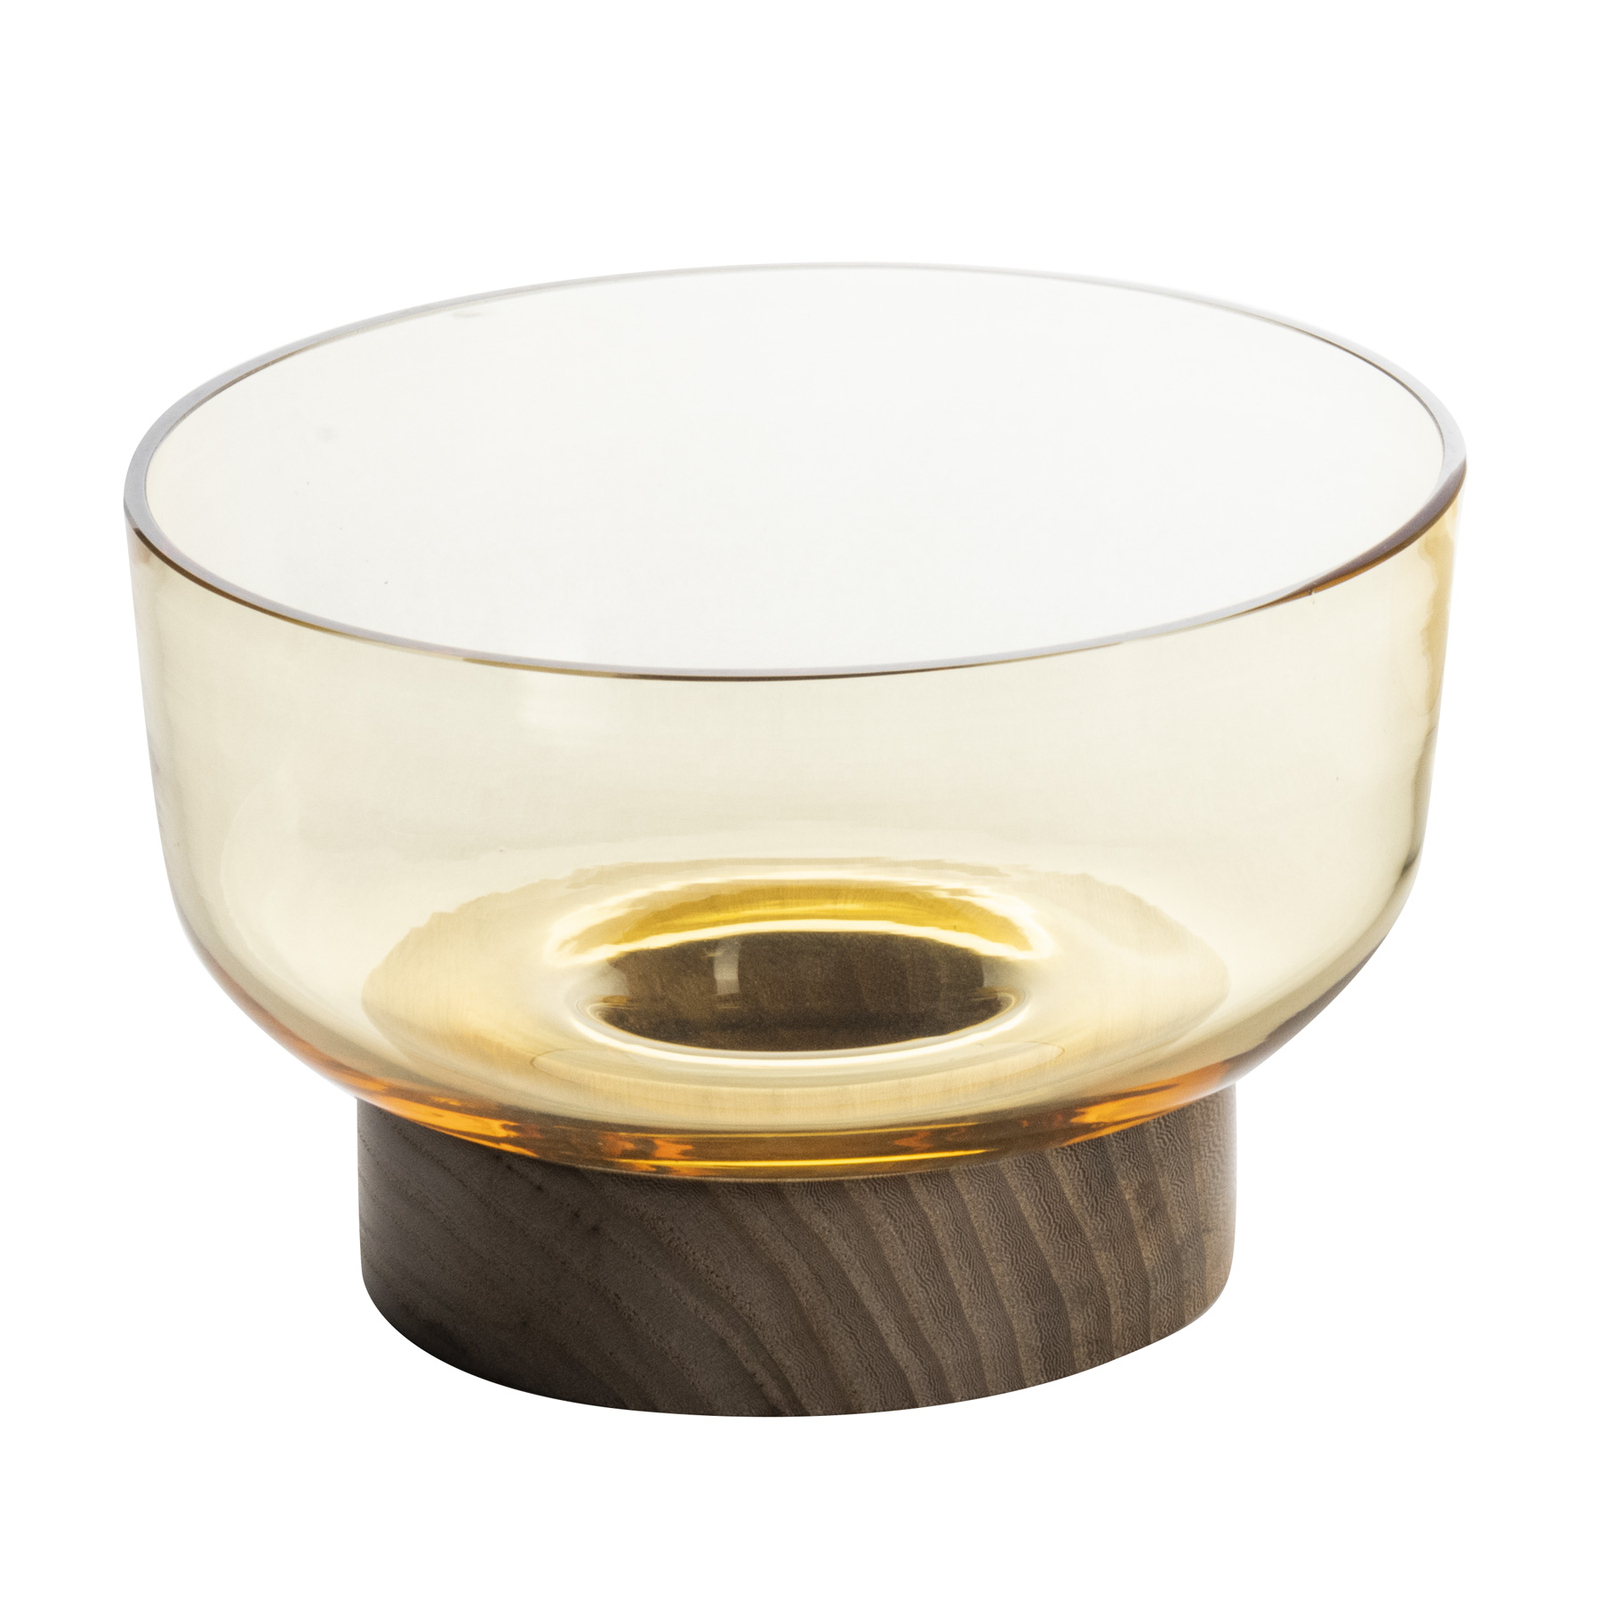 Artemide Bontà glass bowl with wooden base, yellow